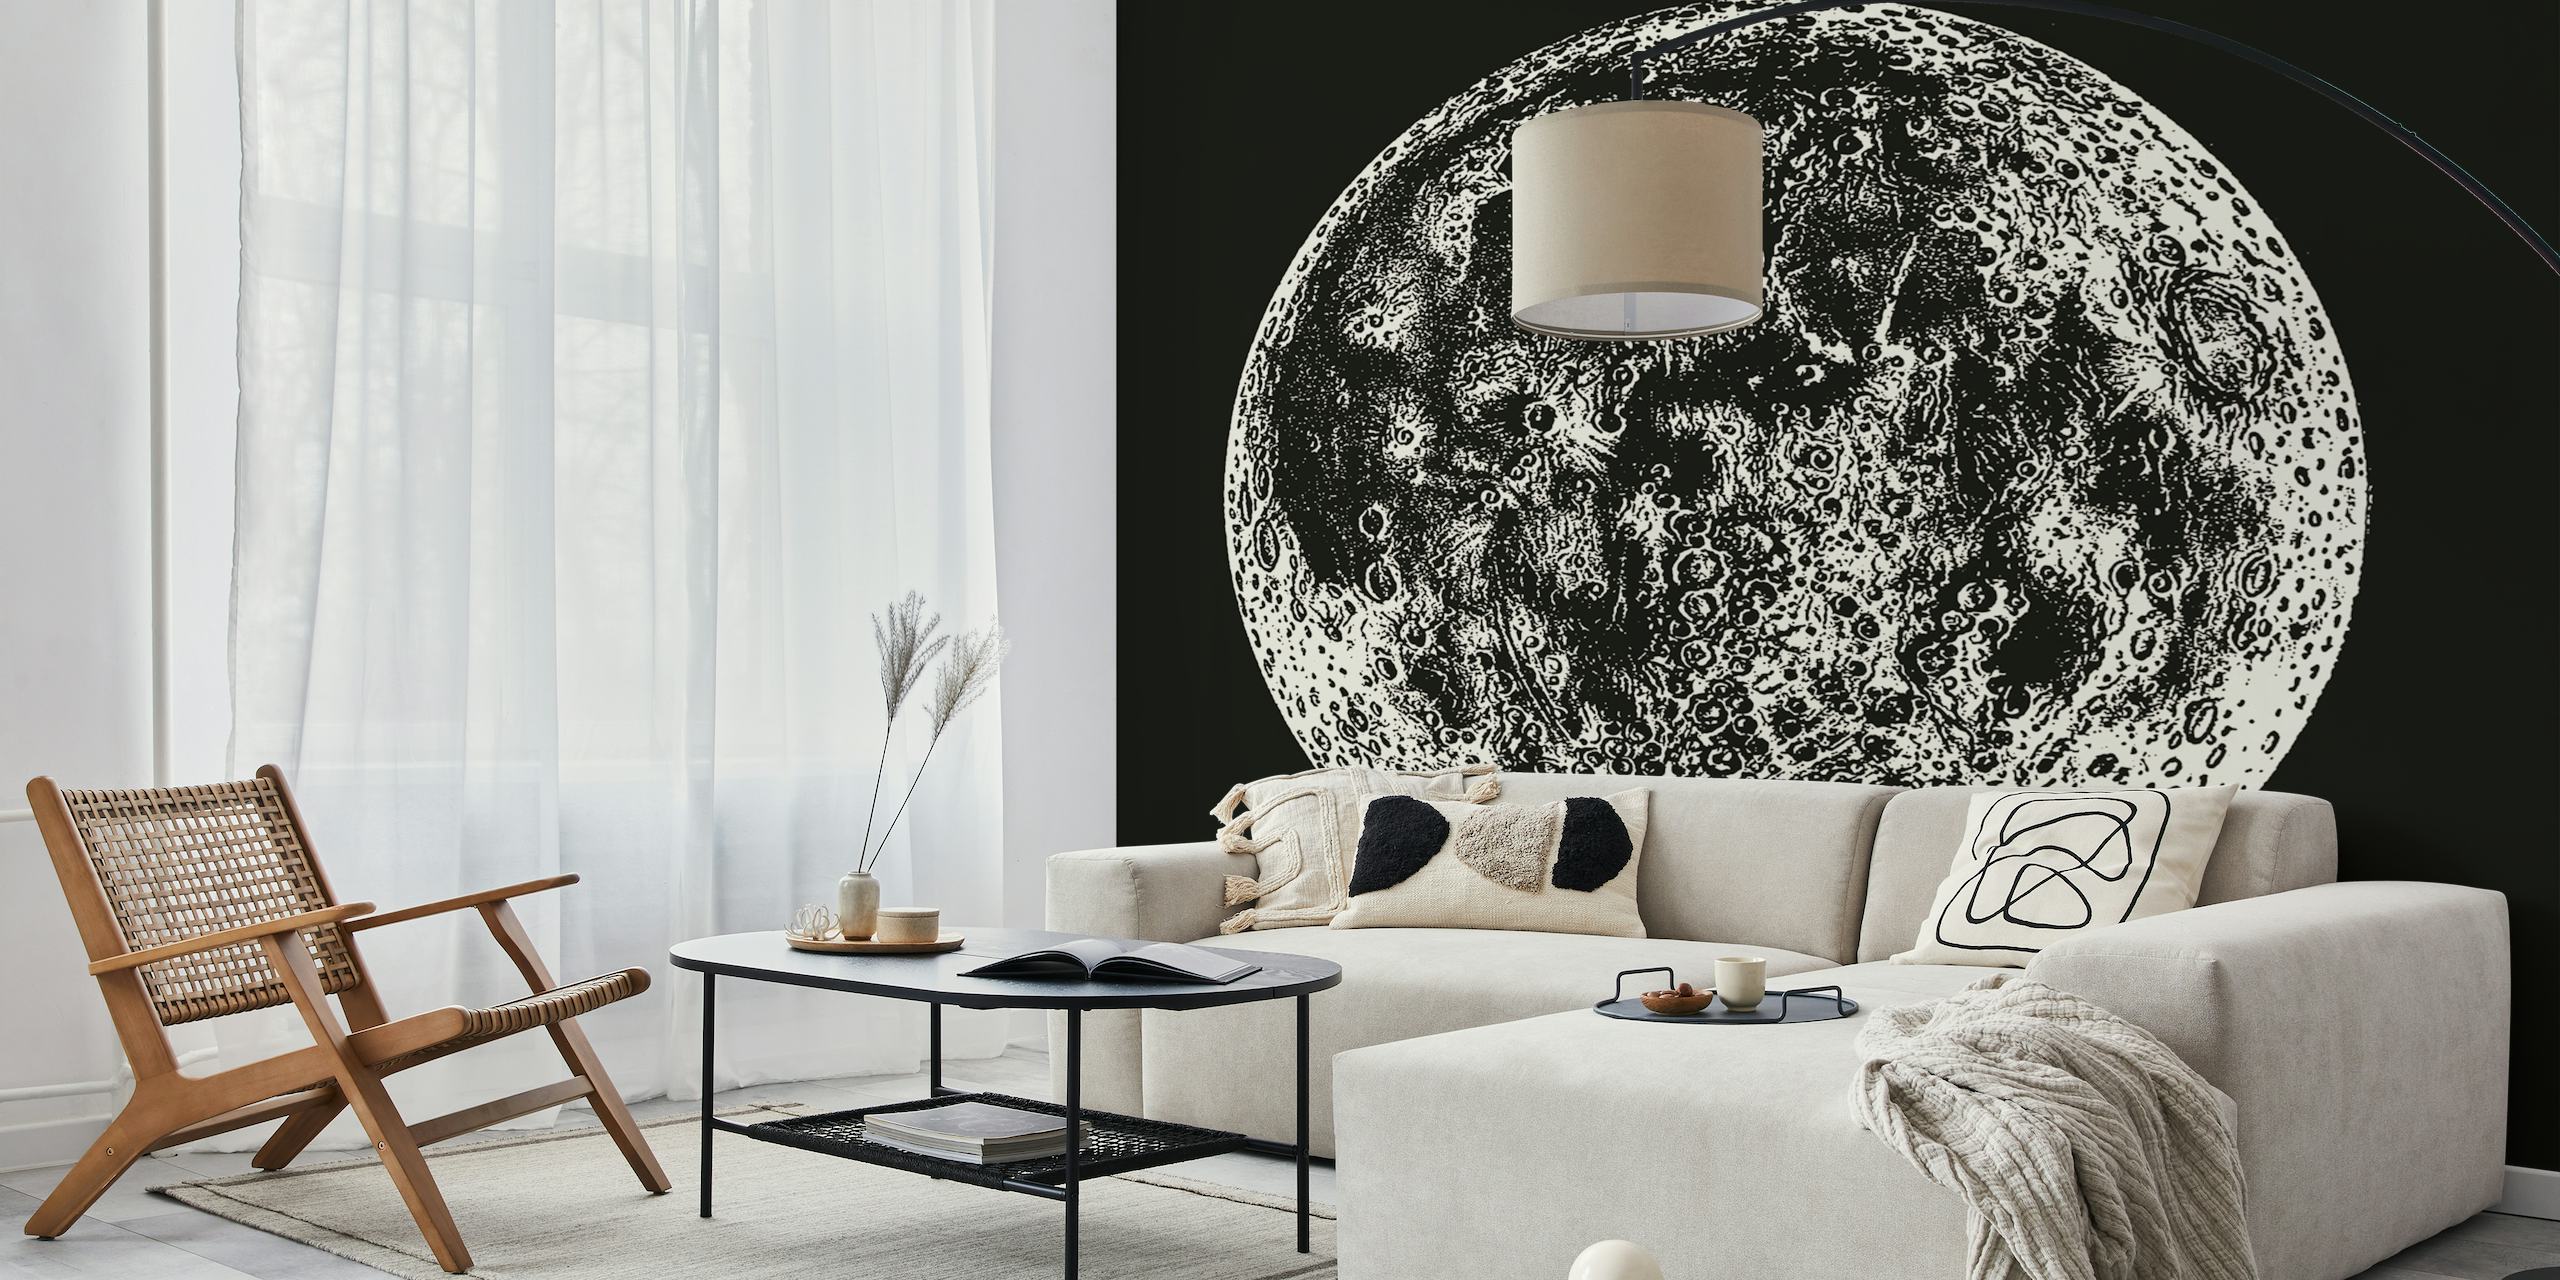 Full Moon - Vintage Astër papiers peint